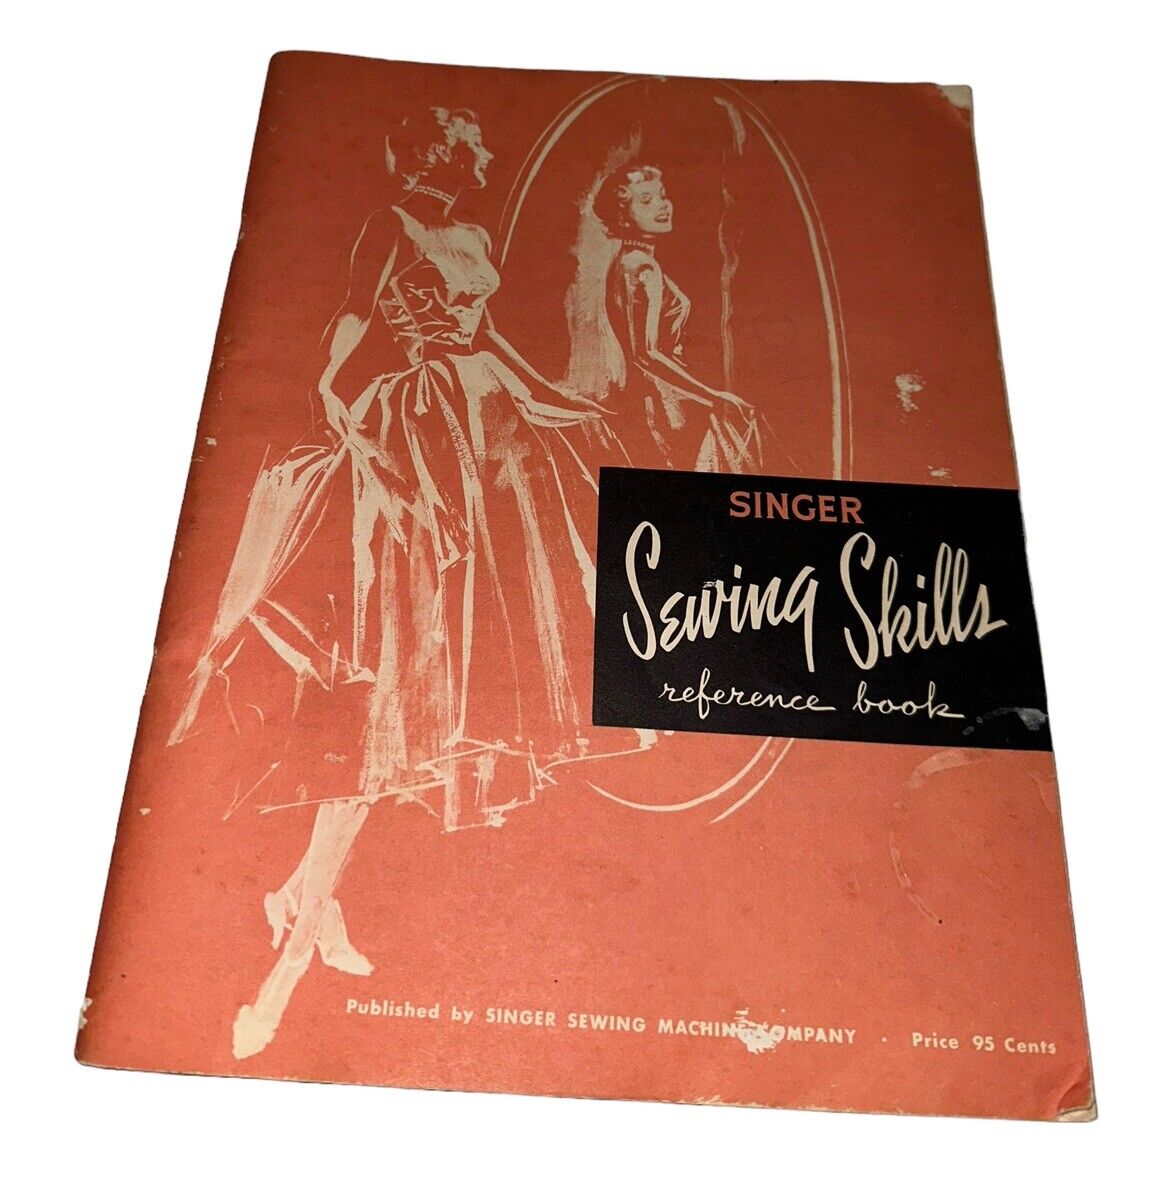 Vintage 1955 Singer Sewing Skills Reference Book READ